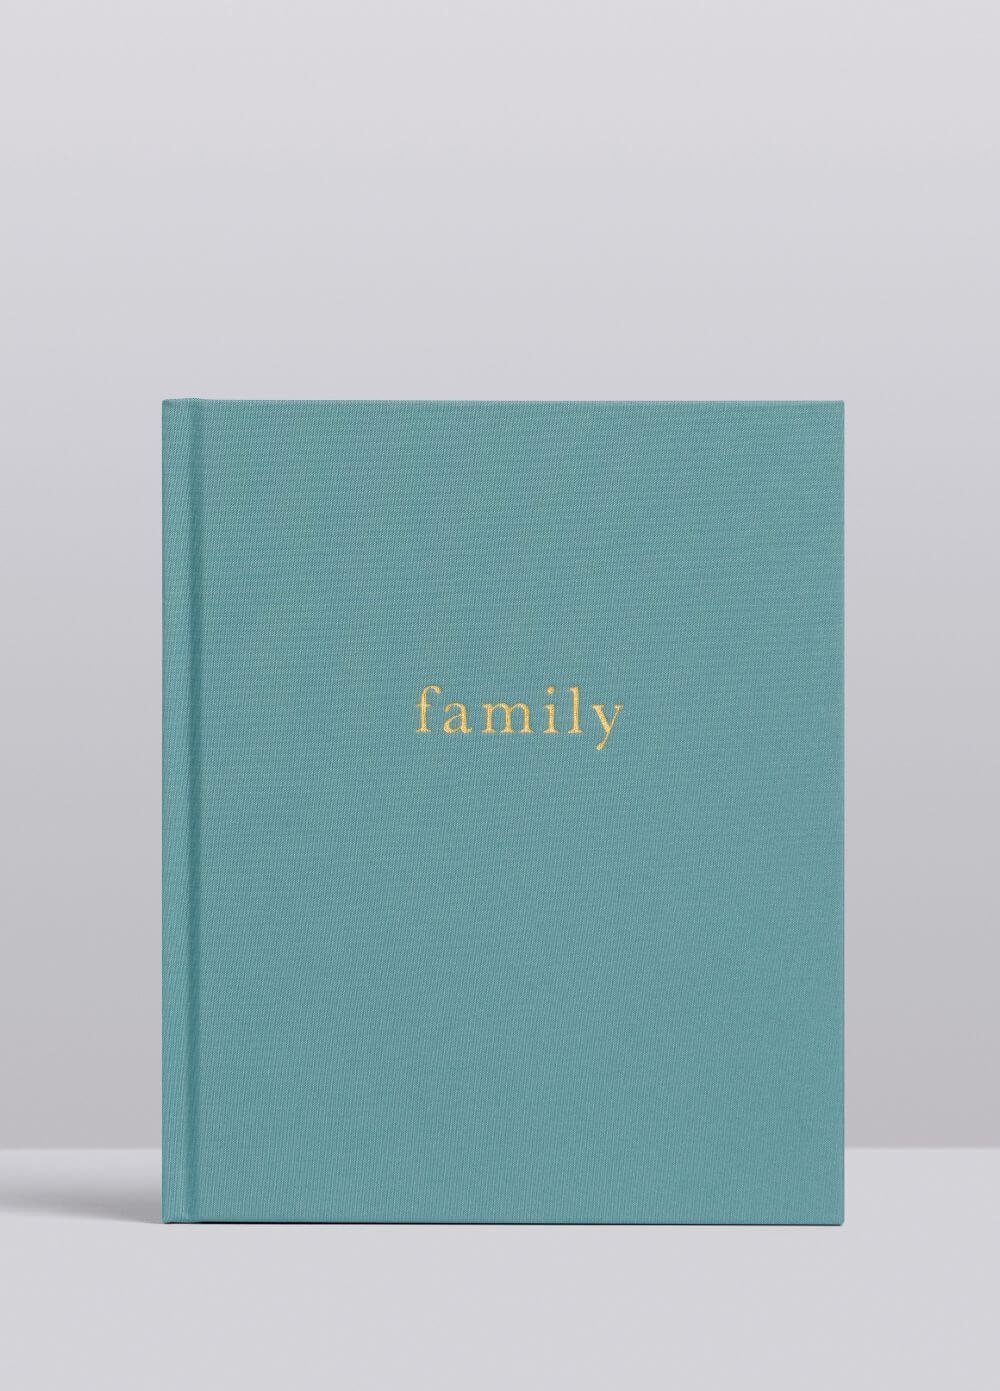 Write to Me - Family, Our Family Book